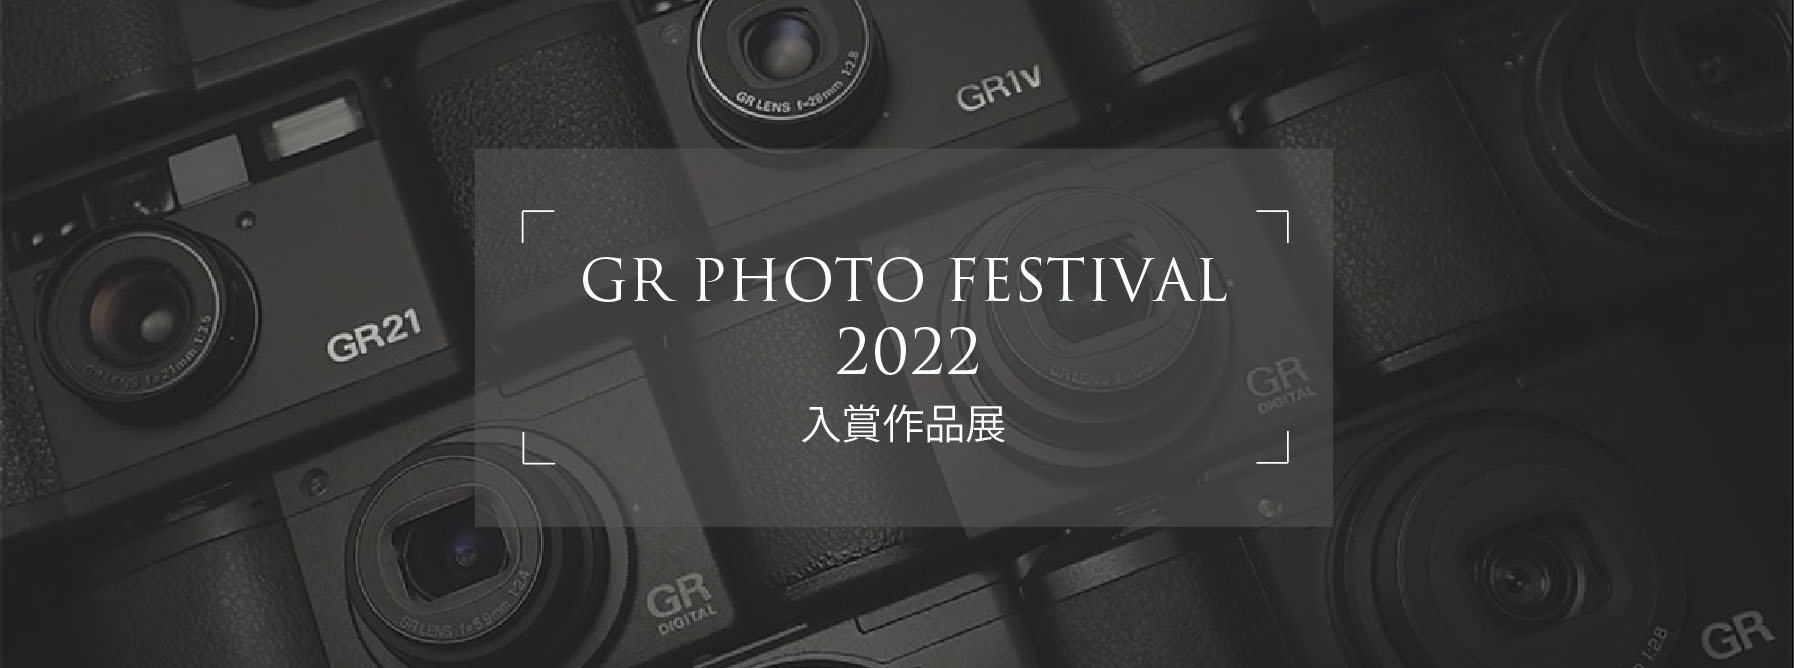 GR PHOTO FESTIVAL 2022入賞作品展